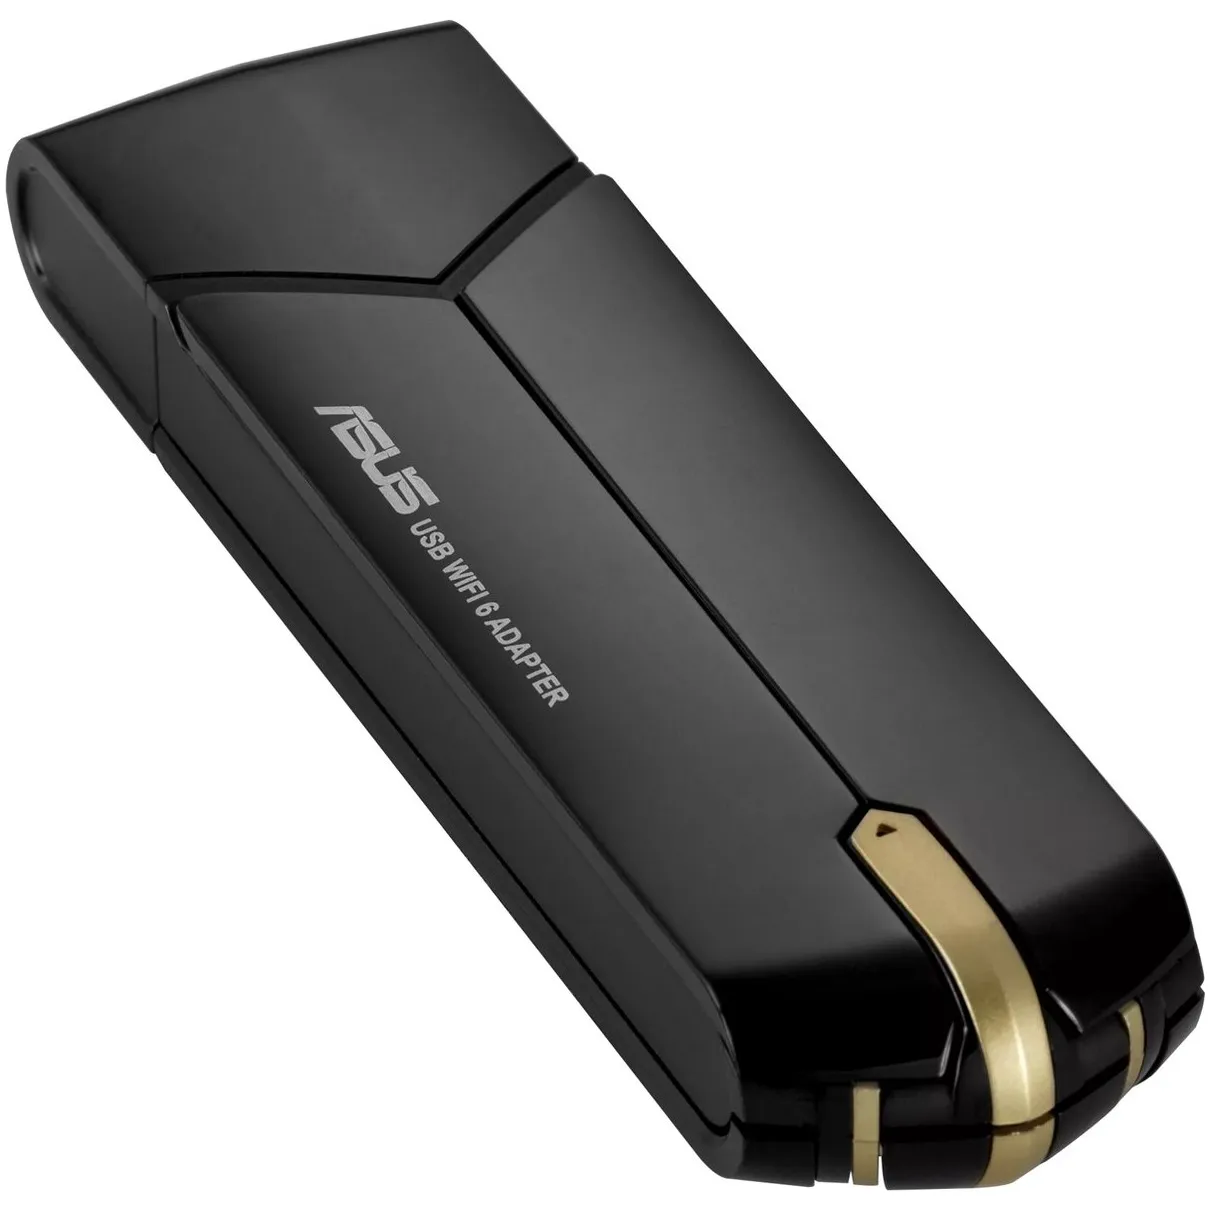 Asus USB-AX56 Dual-band AX1800 USB wifi-adapter